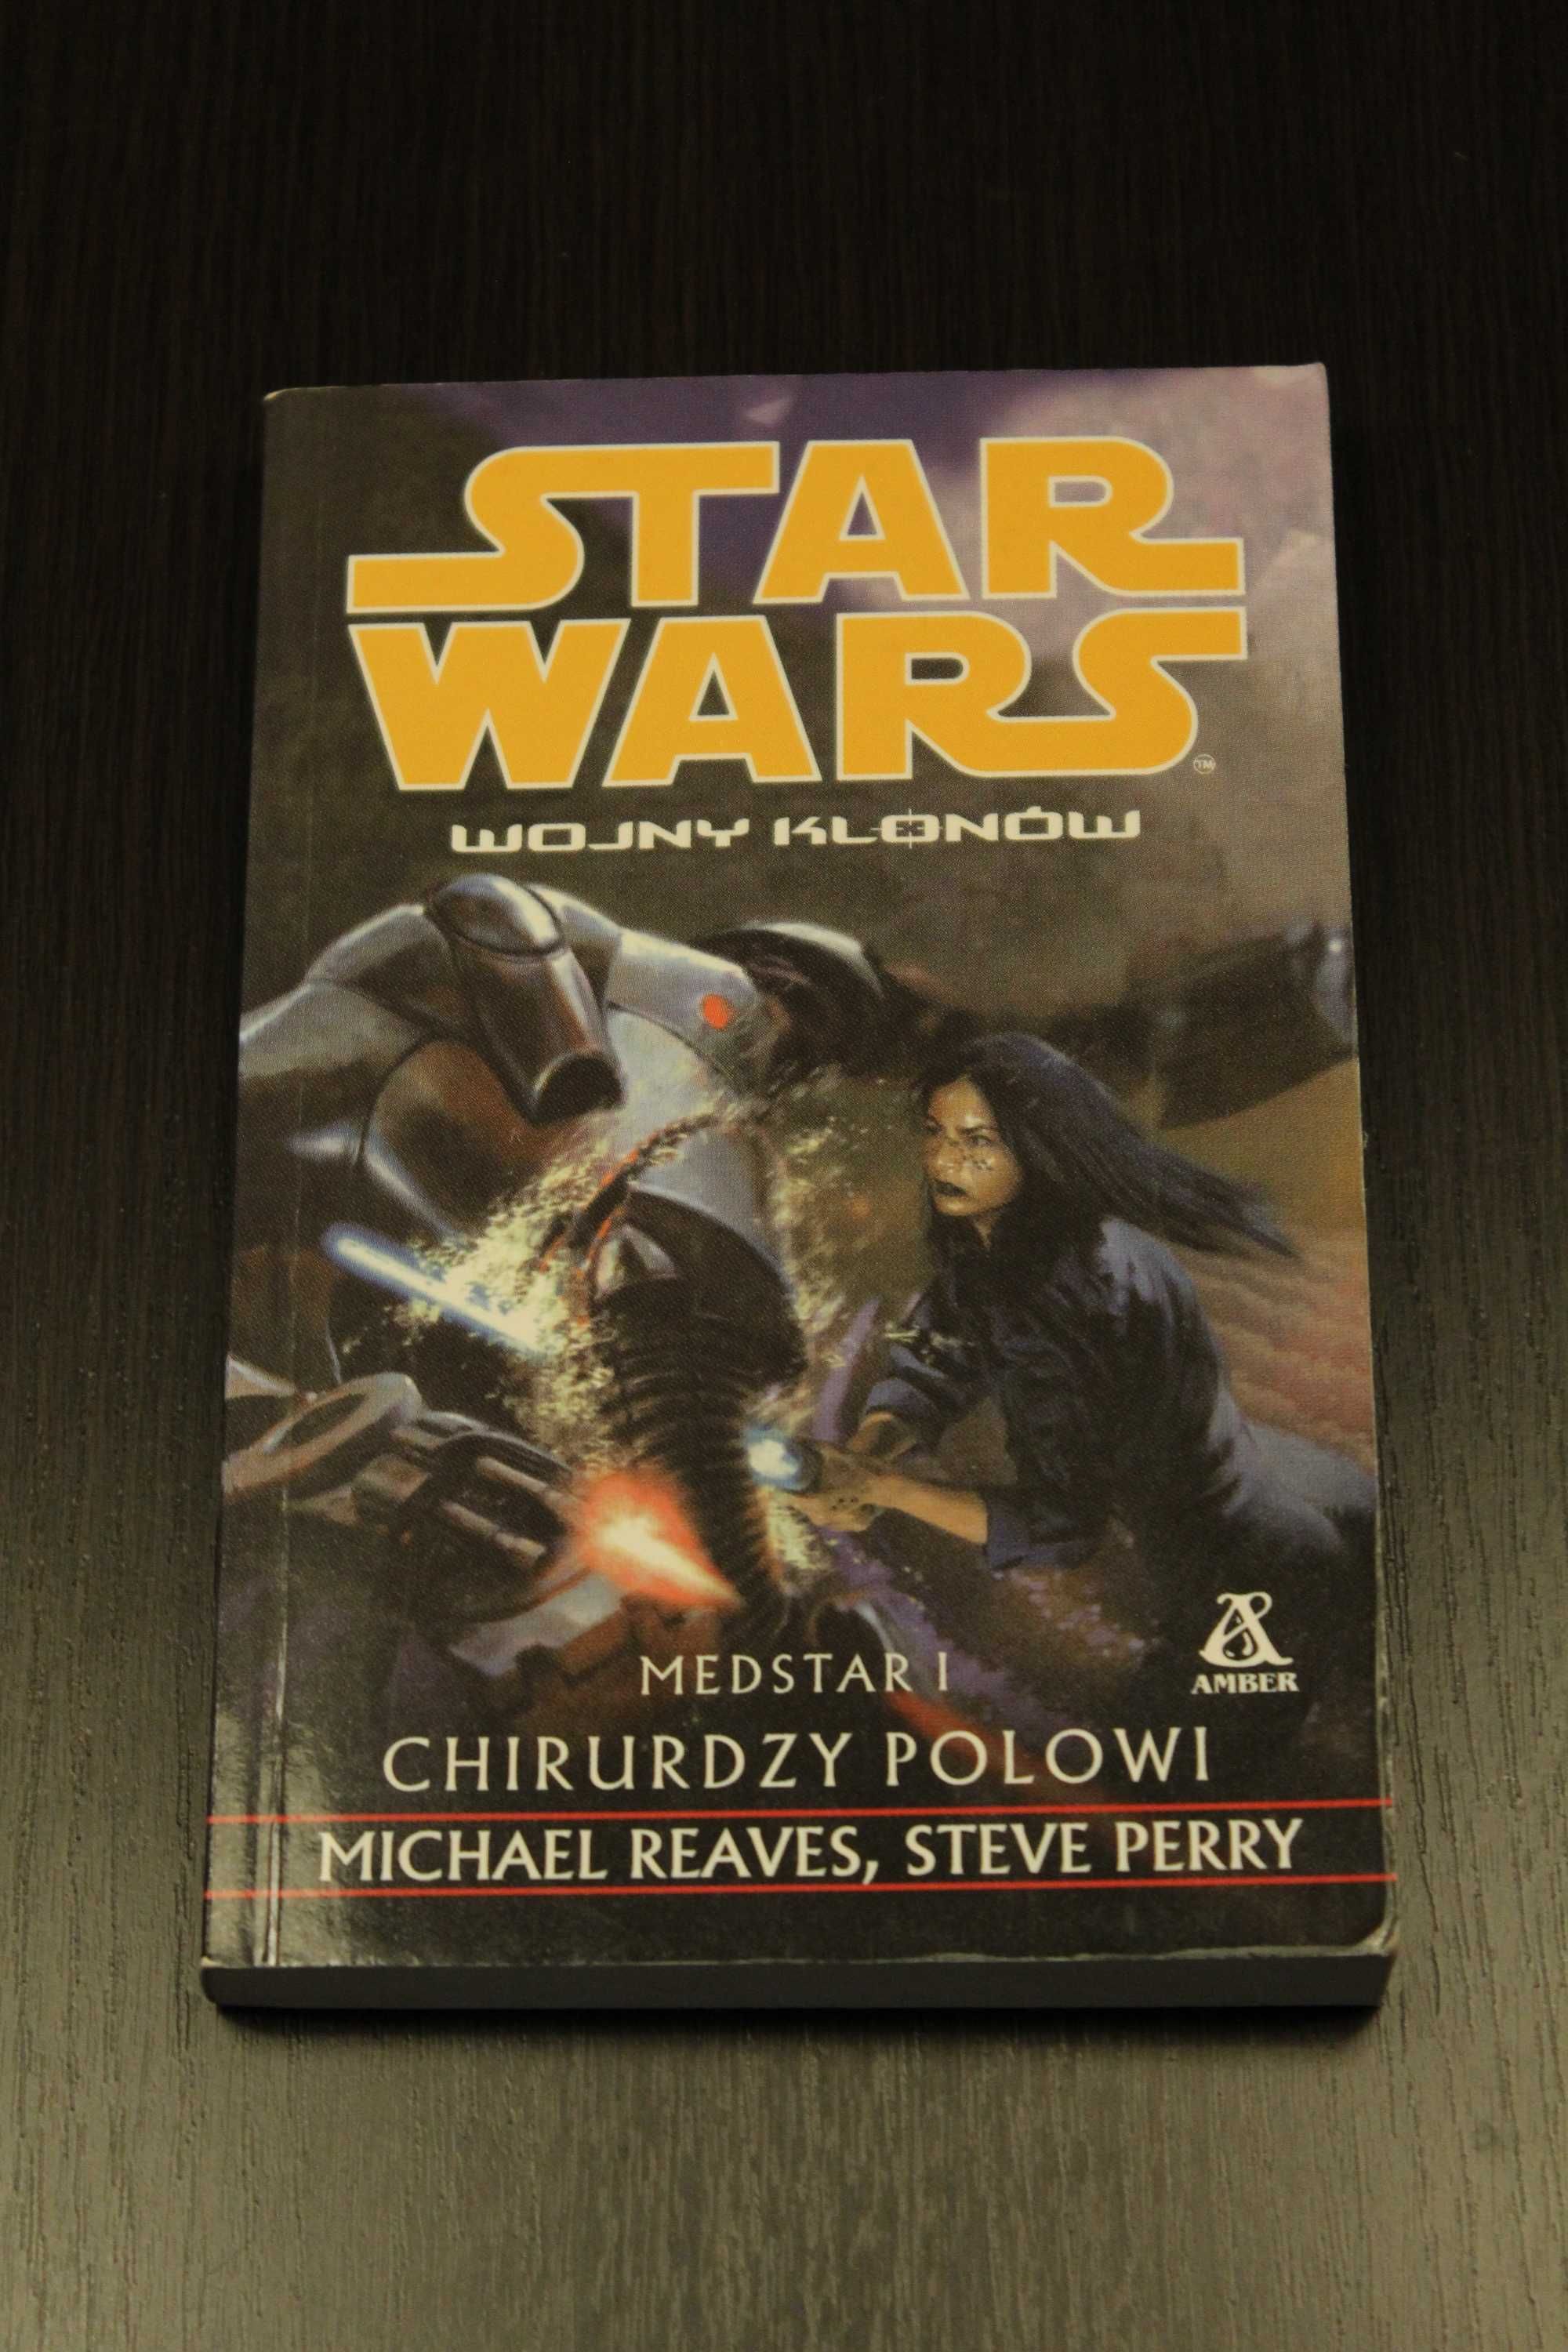 Star Wars Medstar Chirurdzy polowi - Michael Reaves, Steve Perry